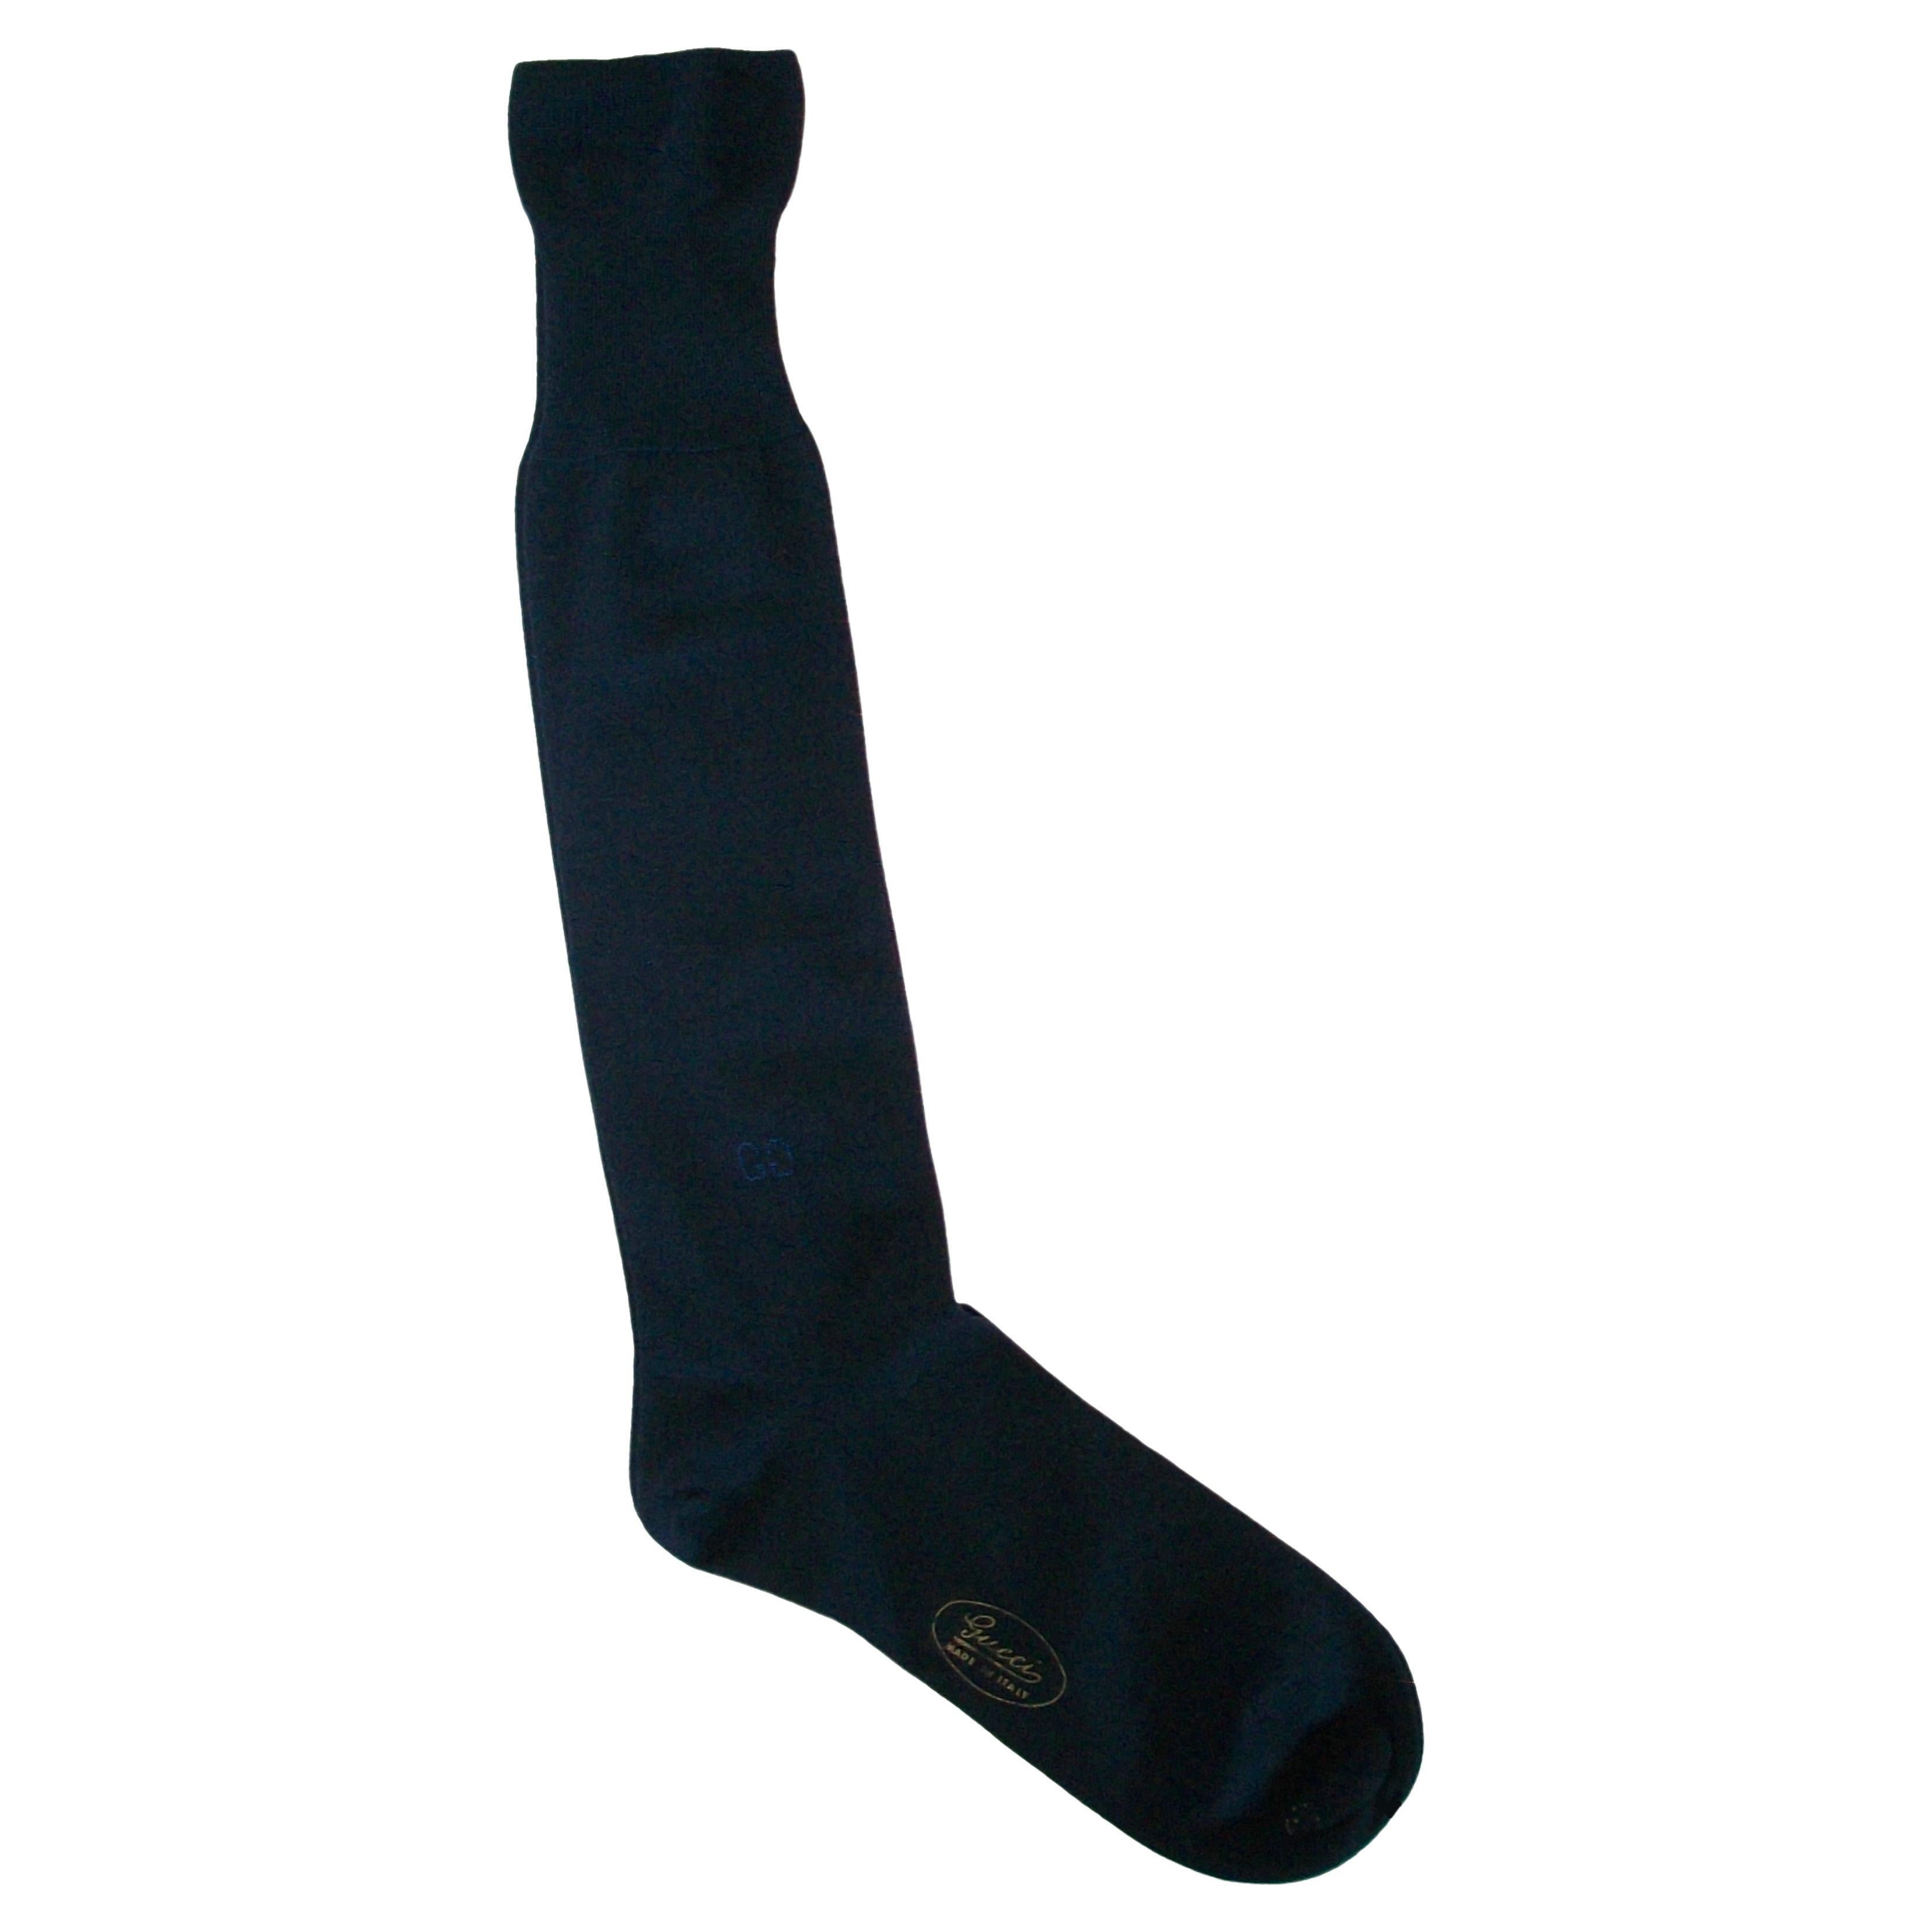 GUCCI - Men's Blue Cashmere & Silk Dress Socks - Size 11 - Italy - Circa 1980's